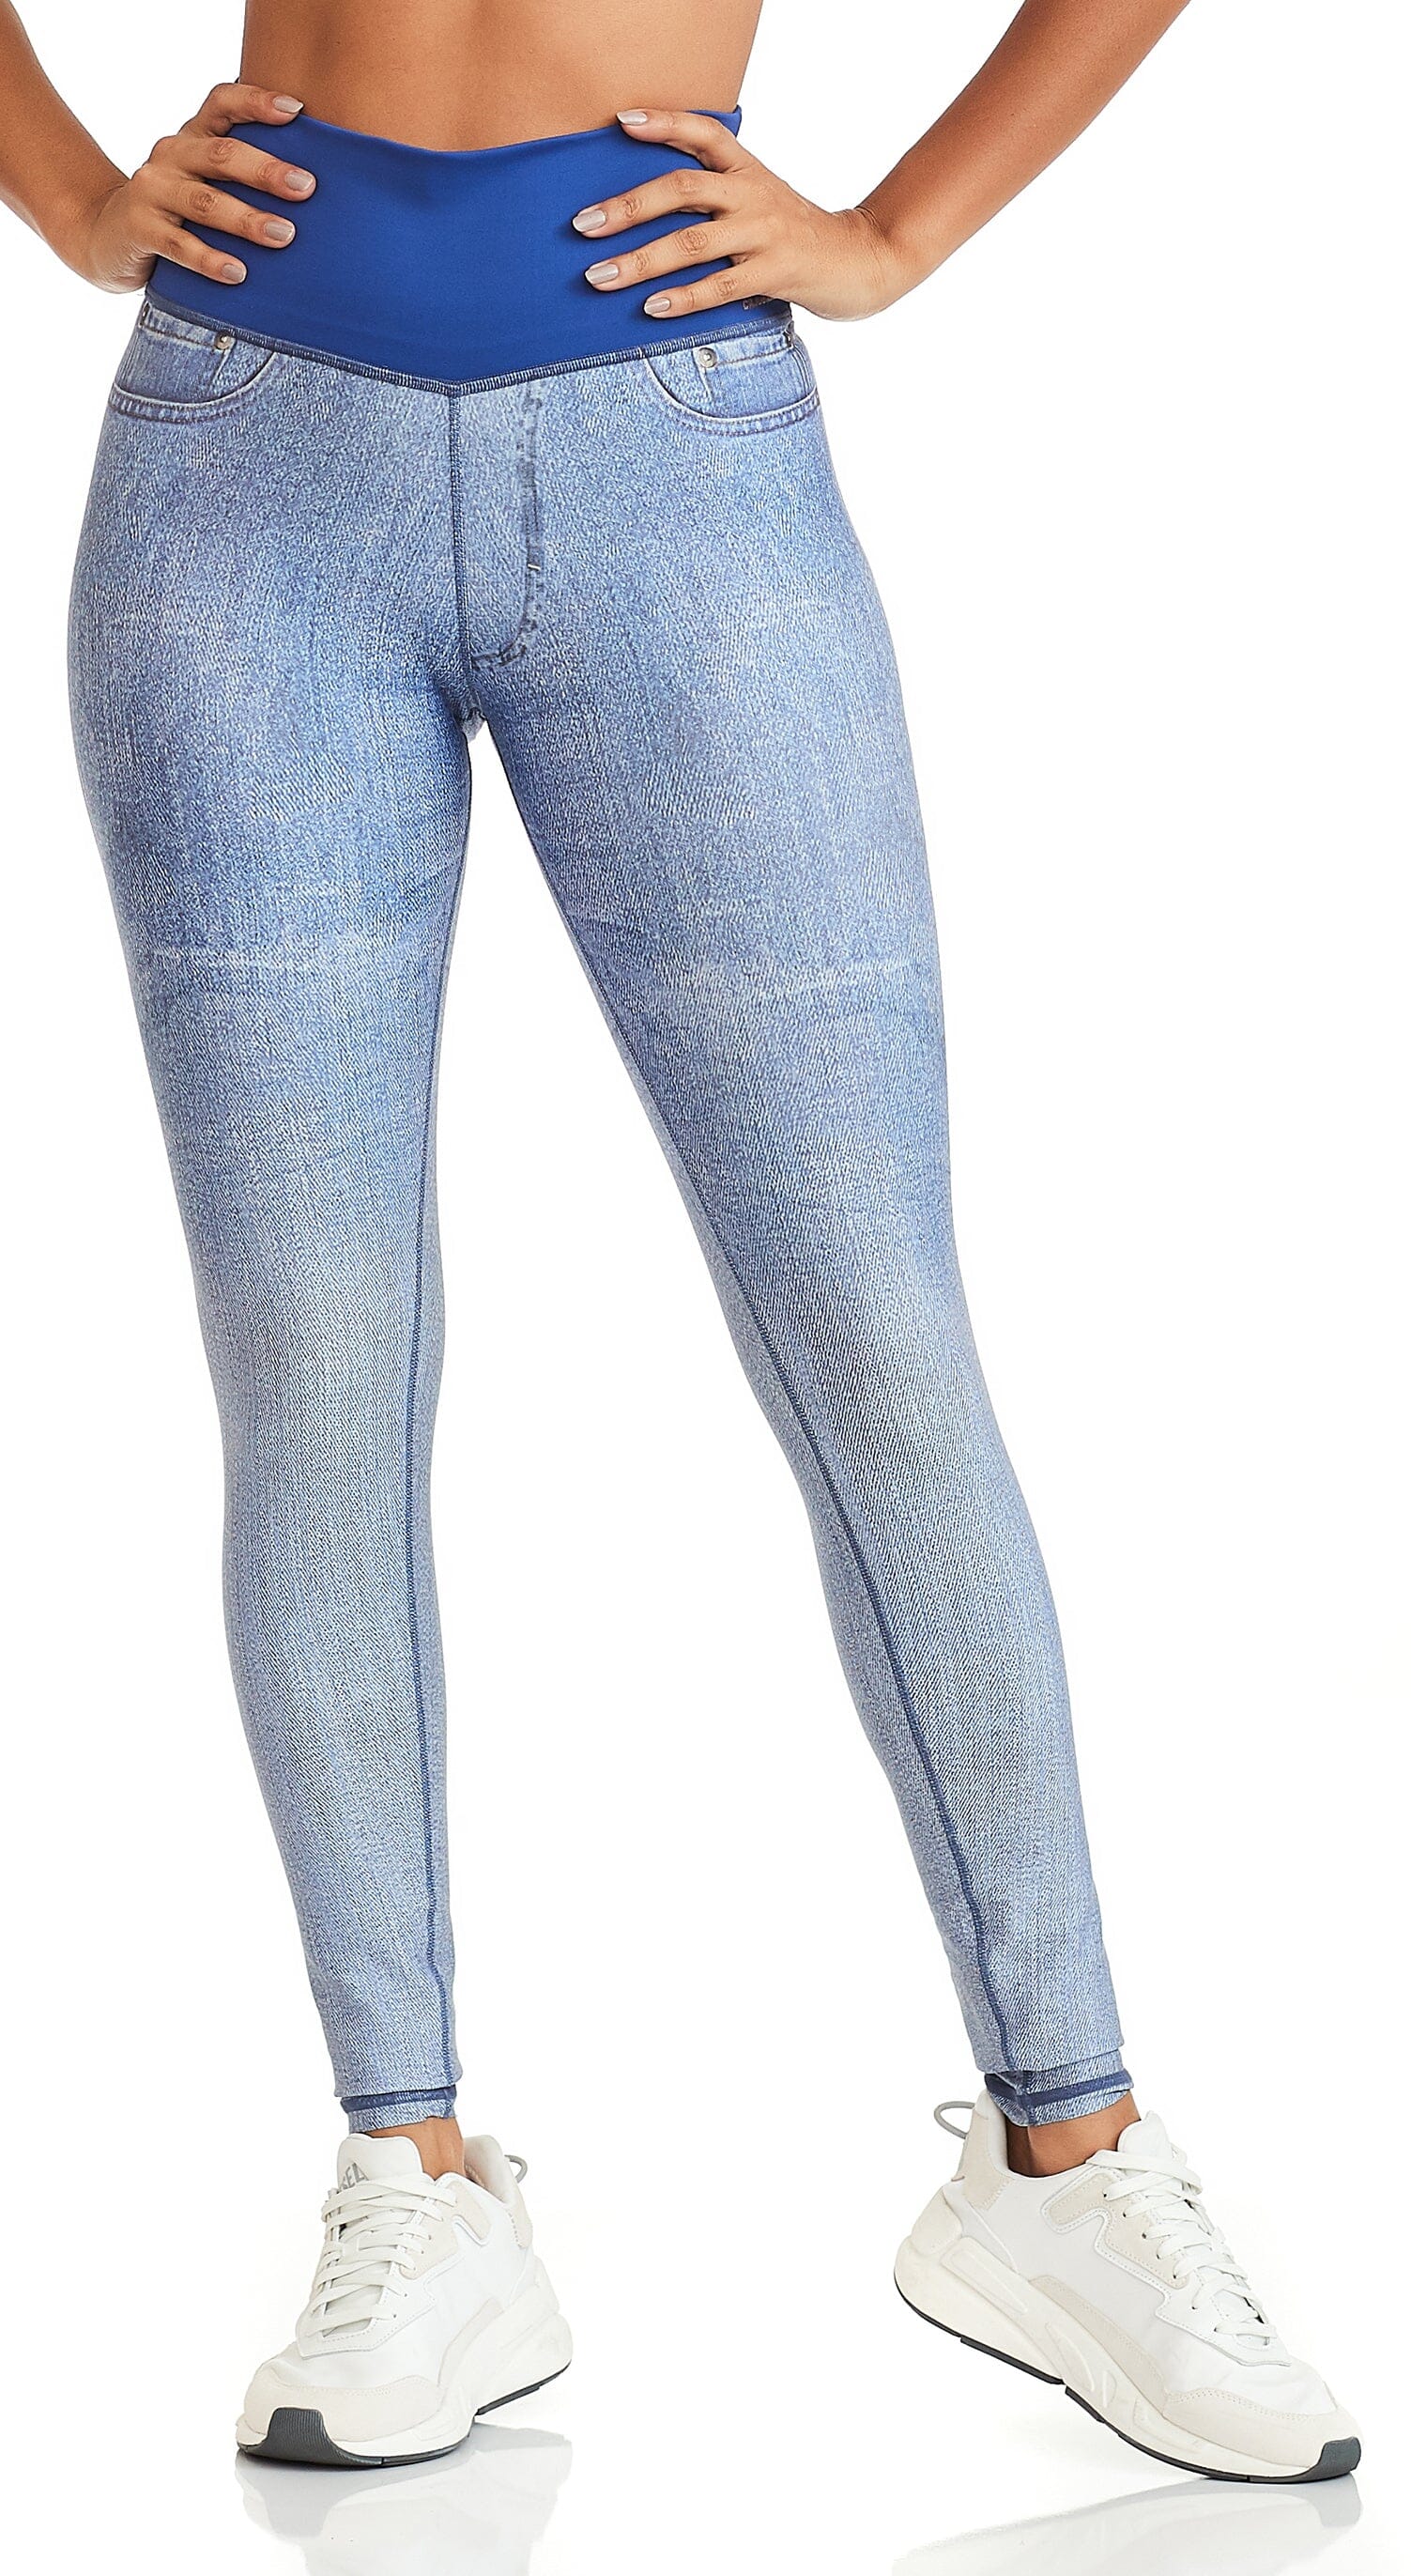 Soft Stretchy Fake Jeans Leggings Seamless Yoga Pants Push Up Legging